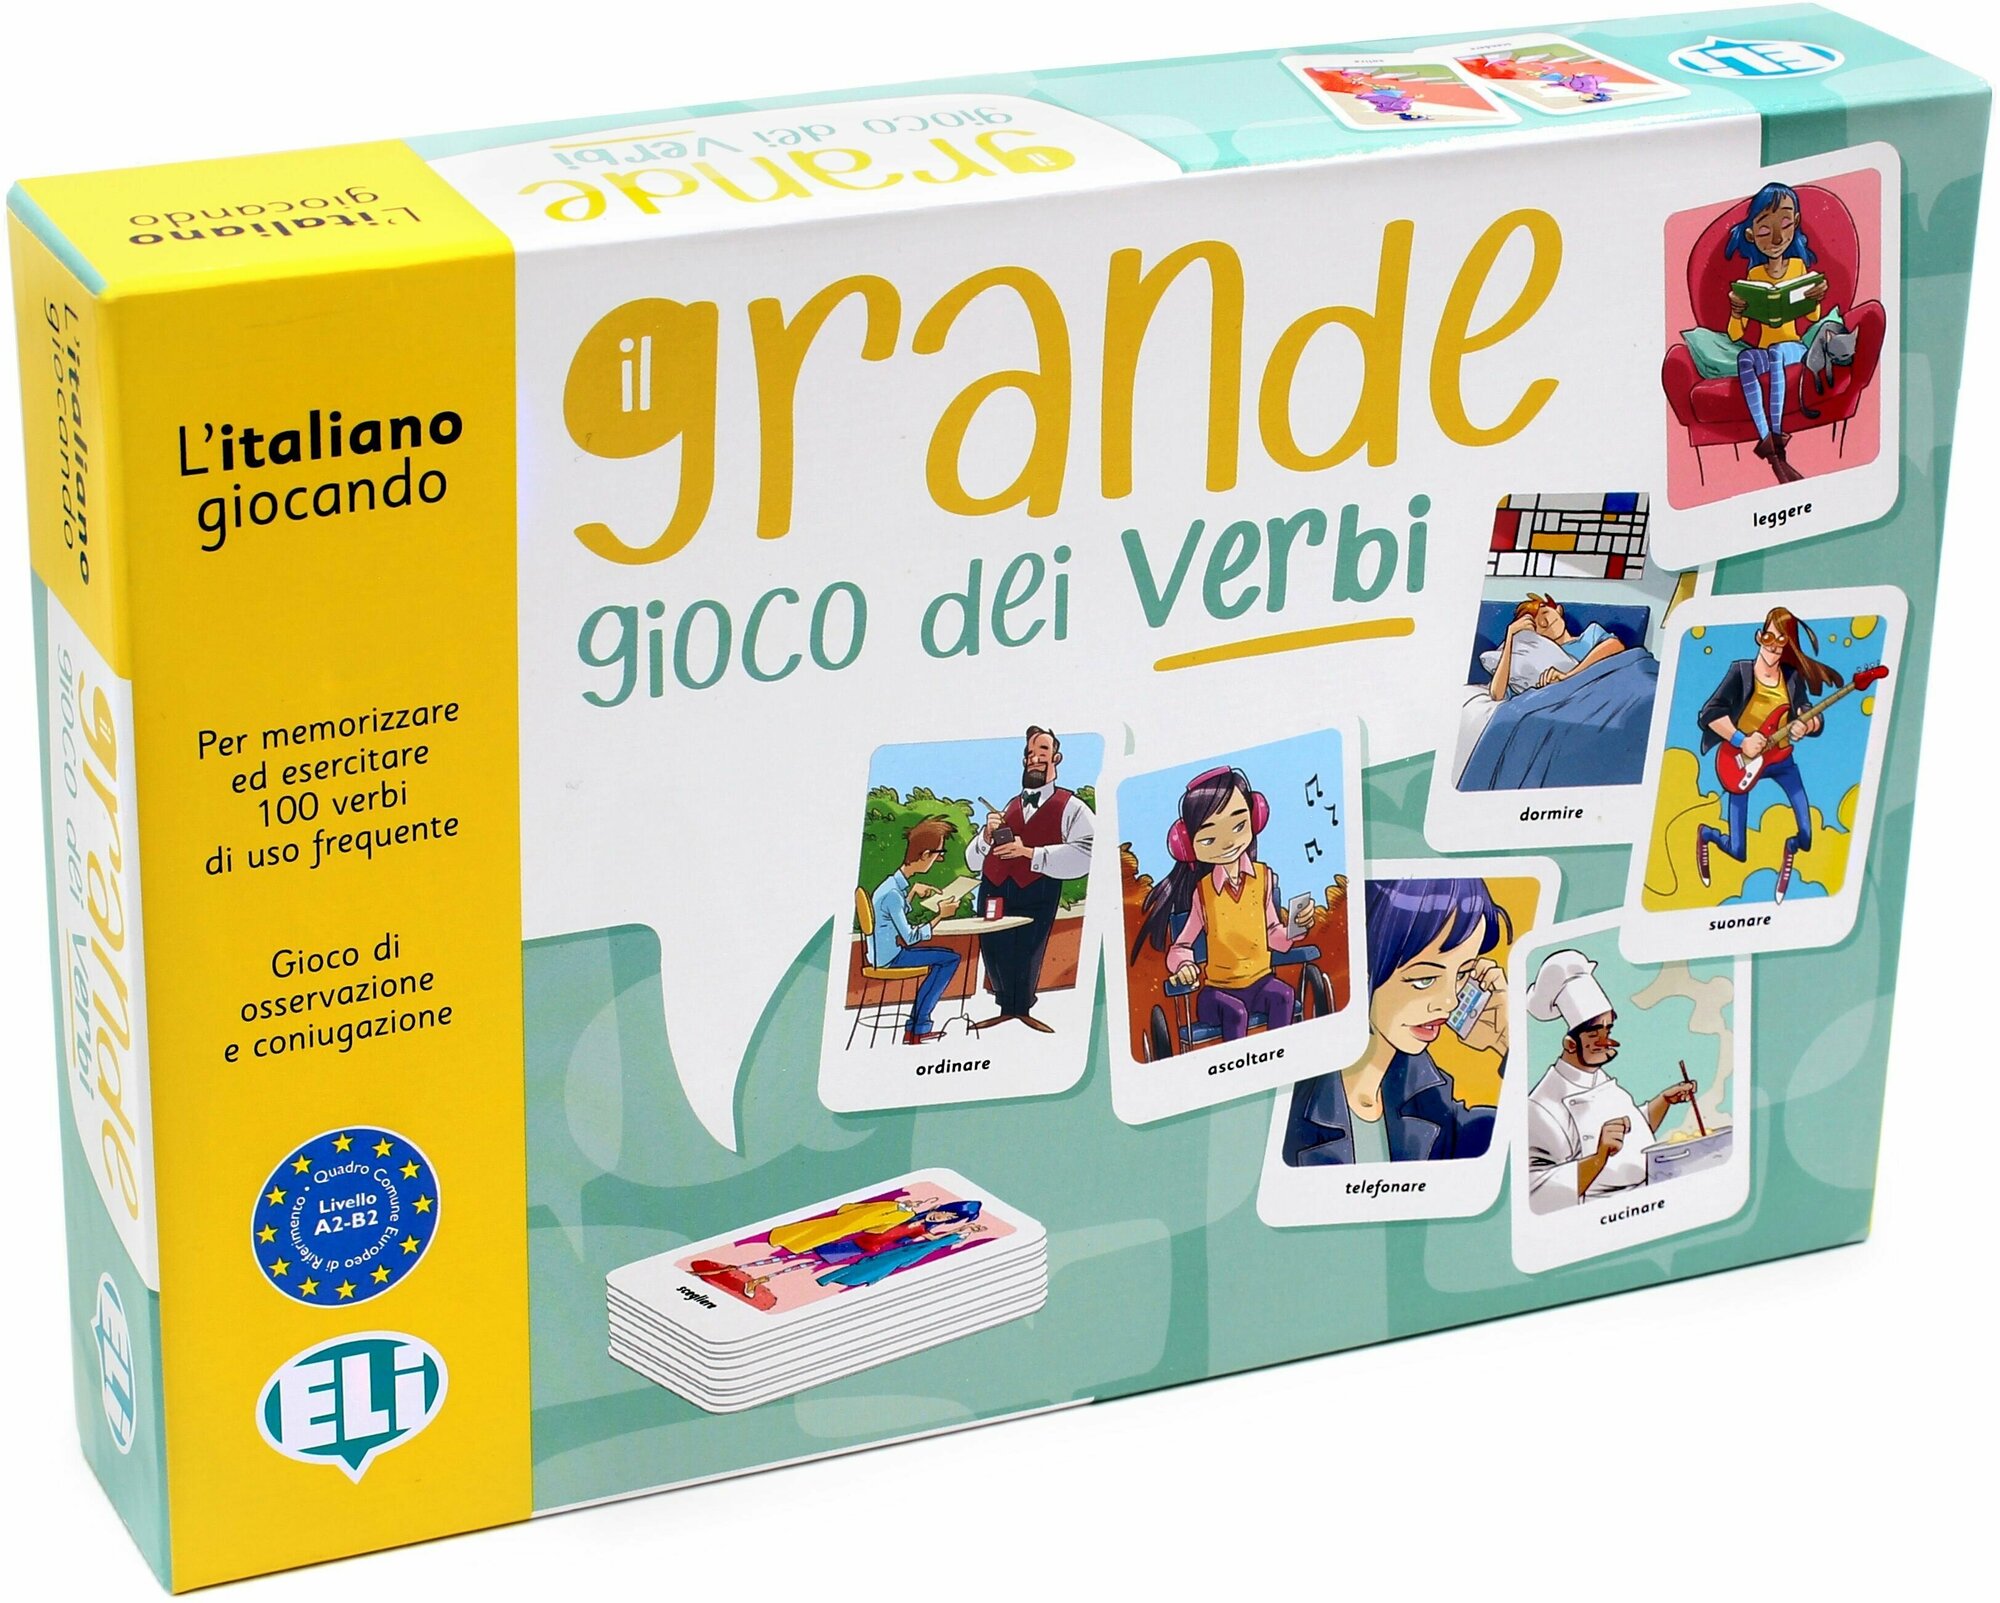 IL GRANDE GIOCO DEI VERBI (A2-B1) / Обучающая игра на итальянском языке "Учим глаголы"